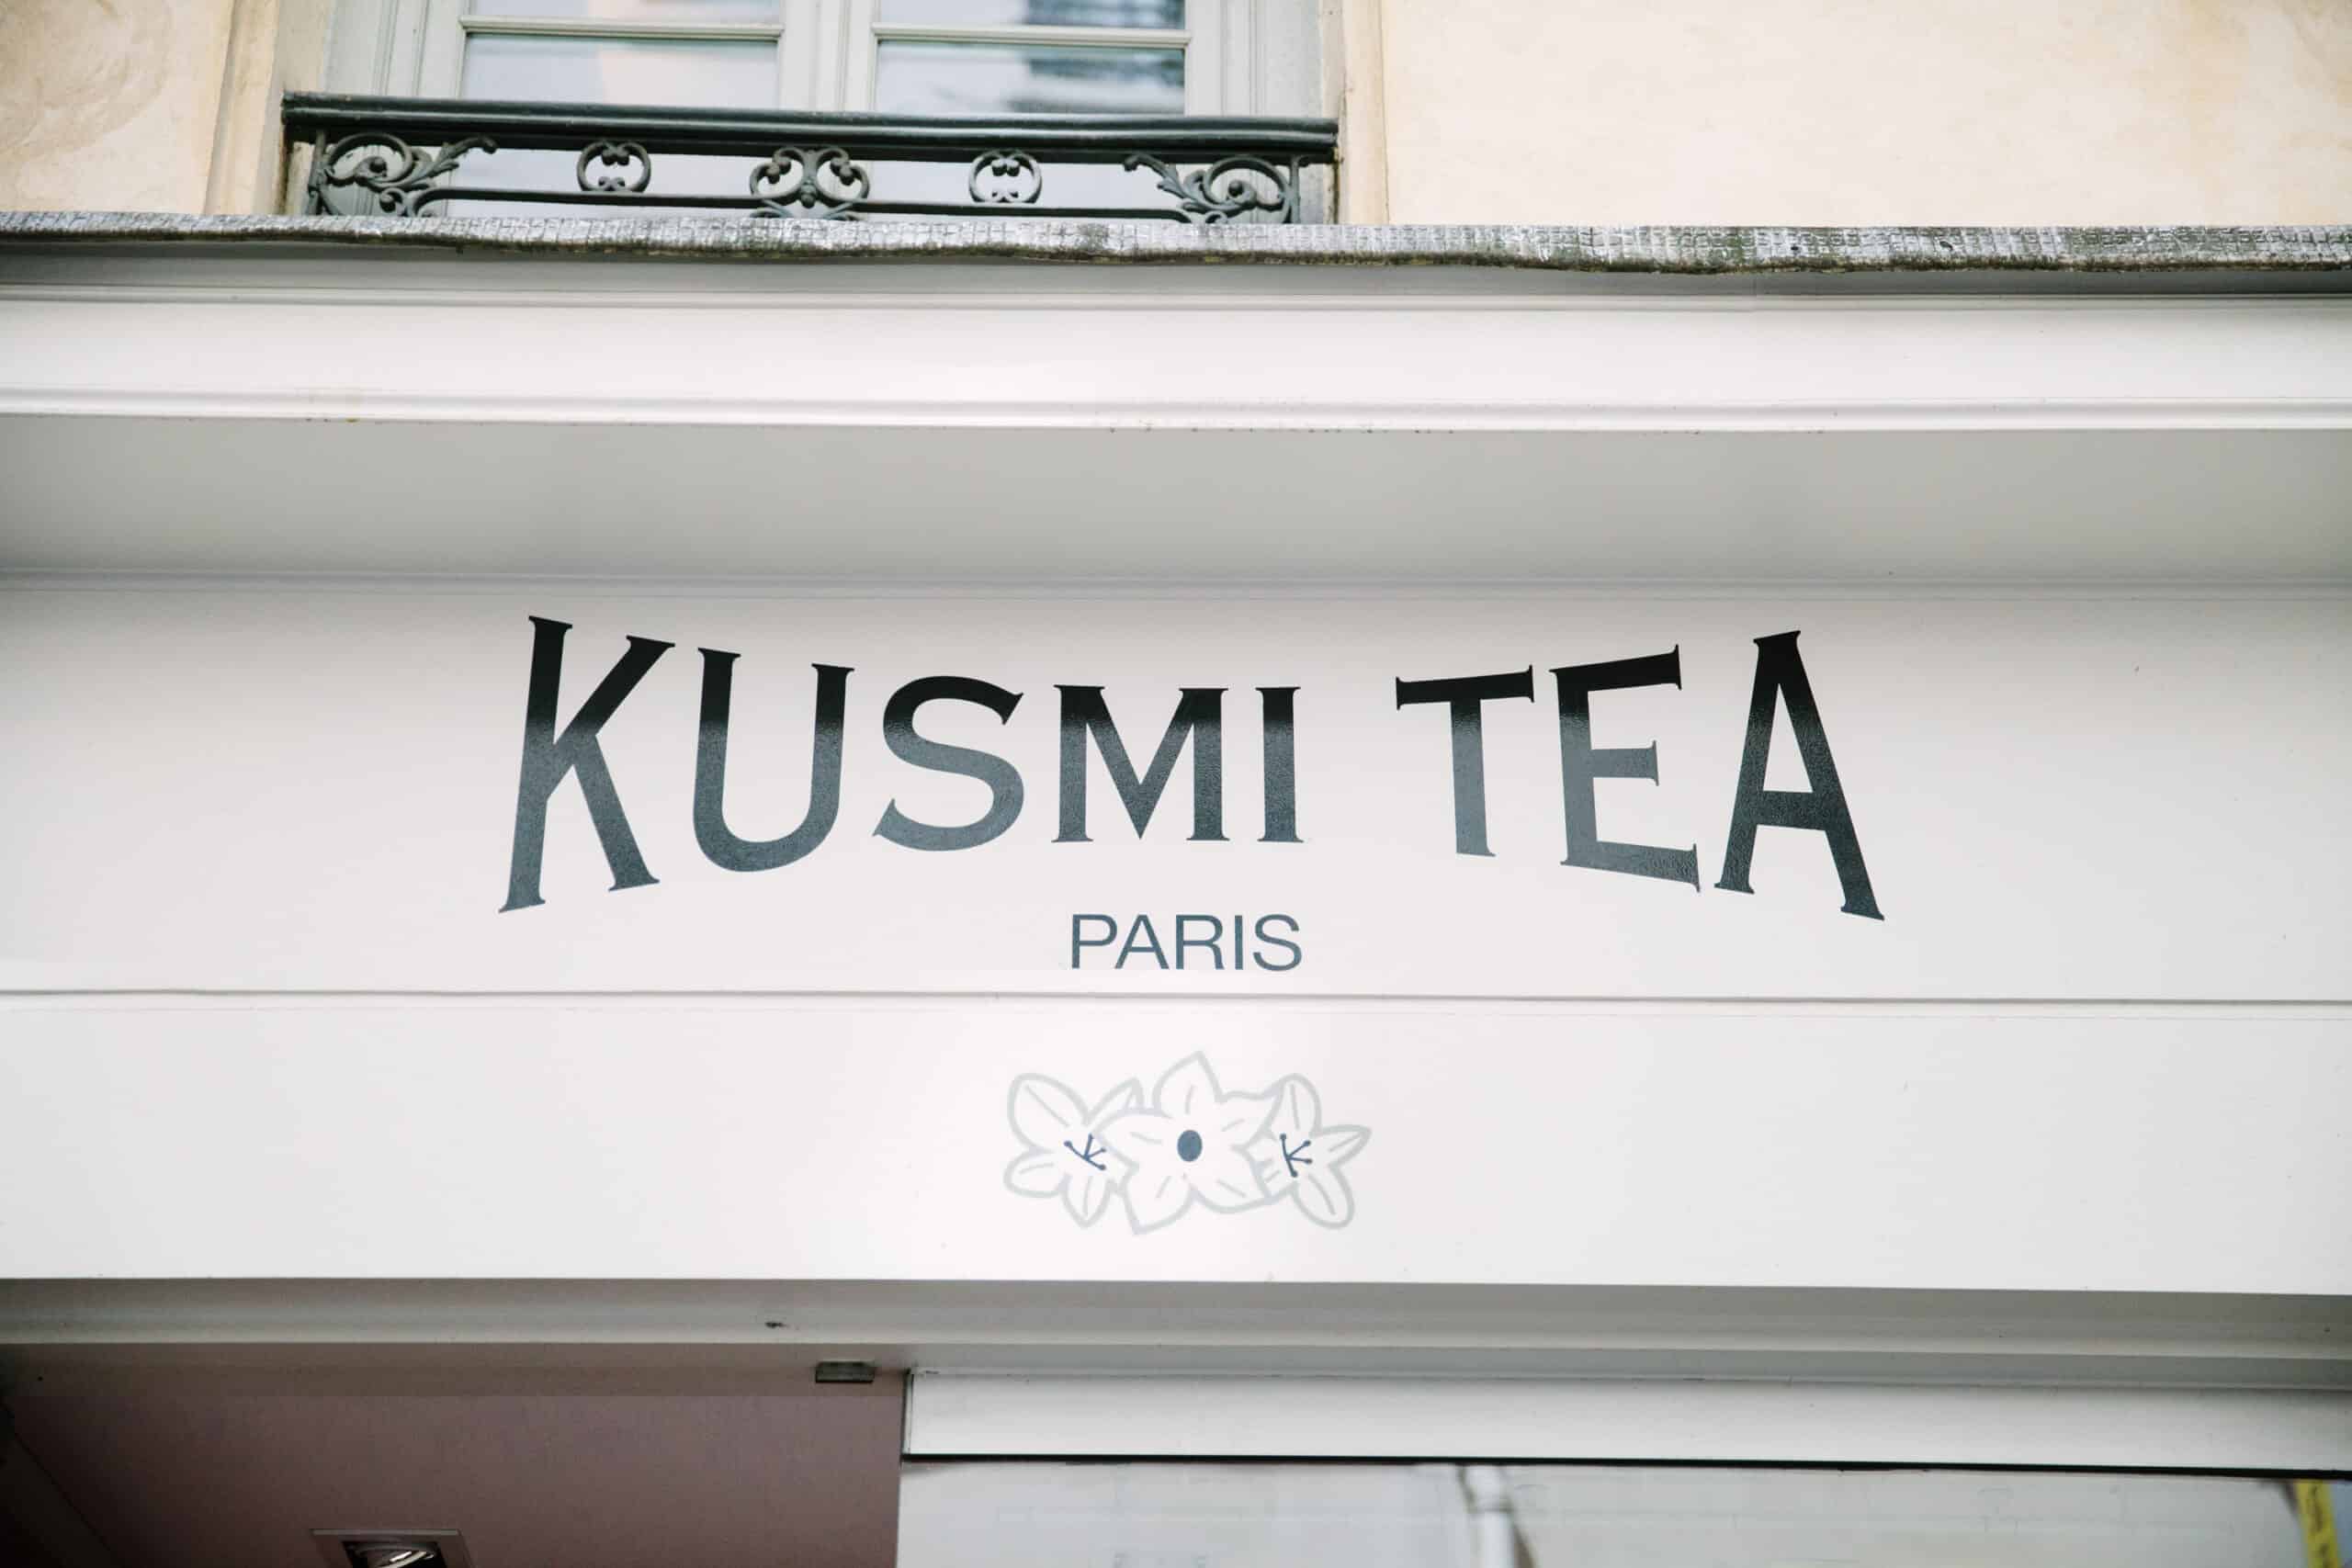 Kusmi Tea in Paris, France